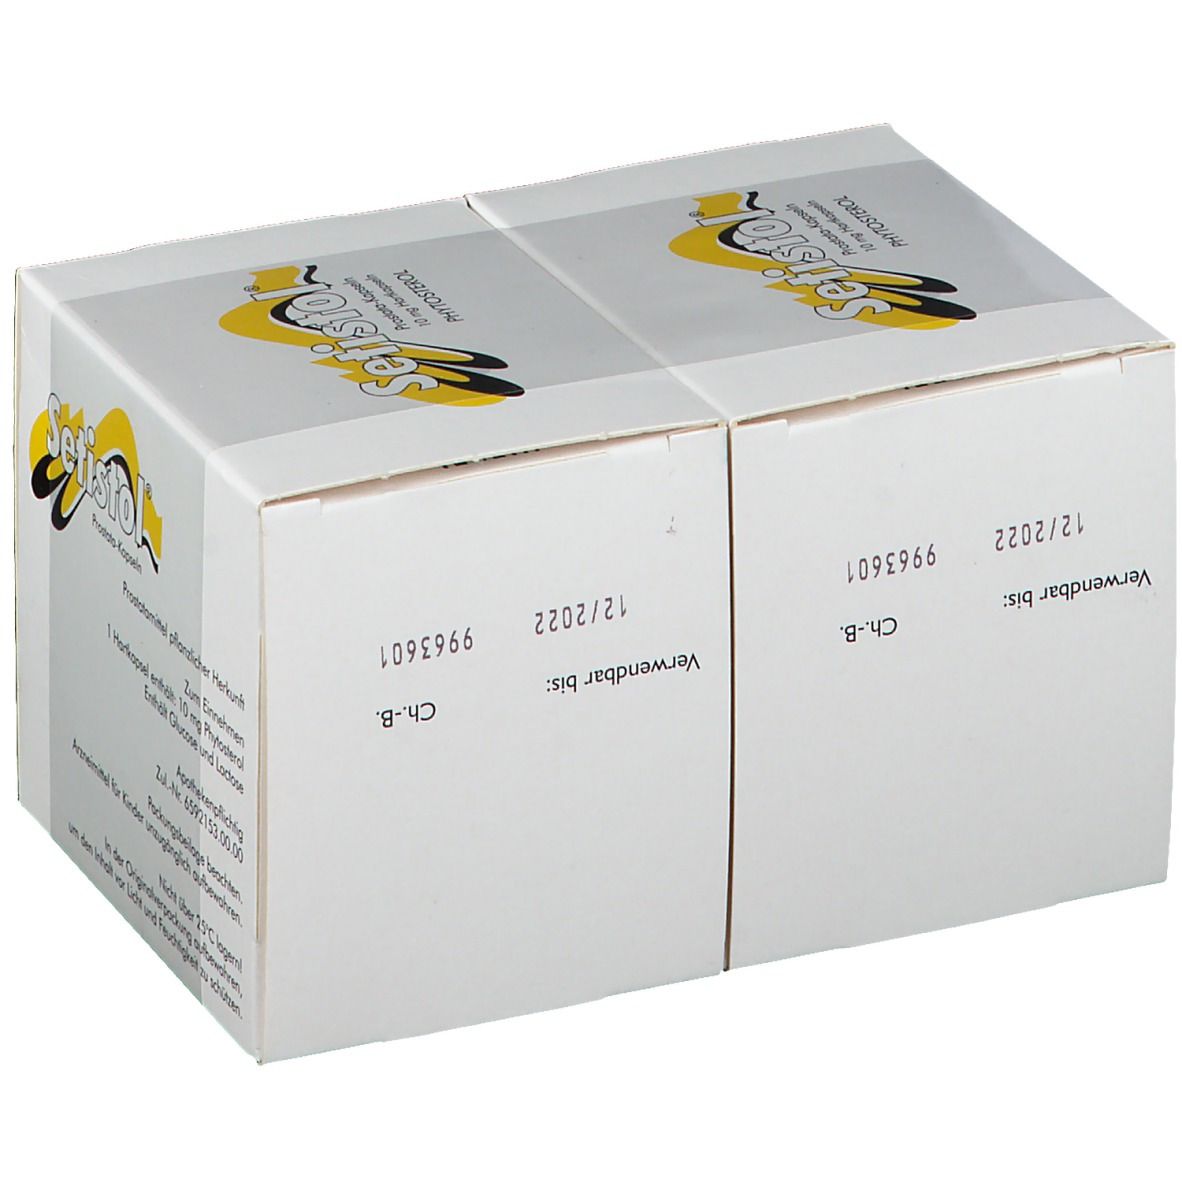 Setistol® Prostata-Kapseln 10 mg